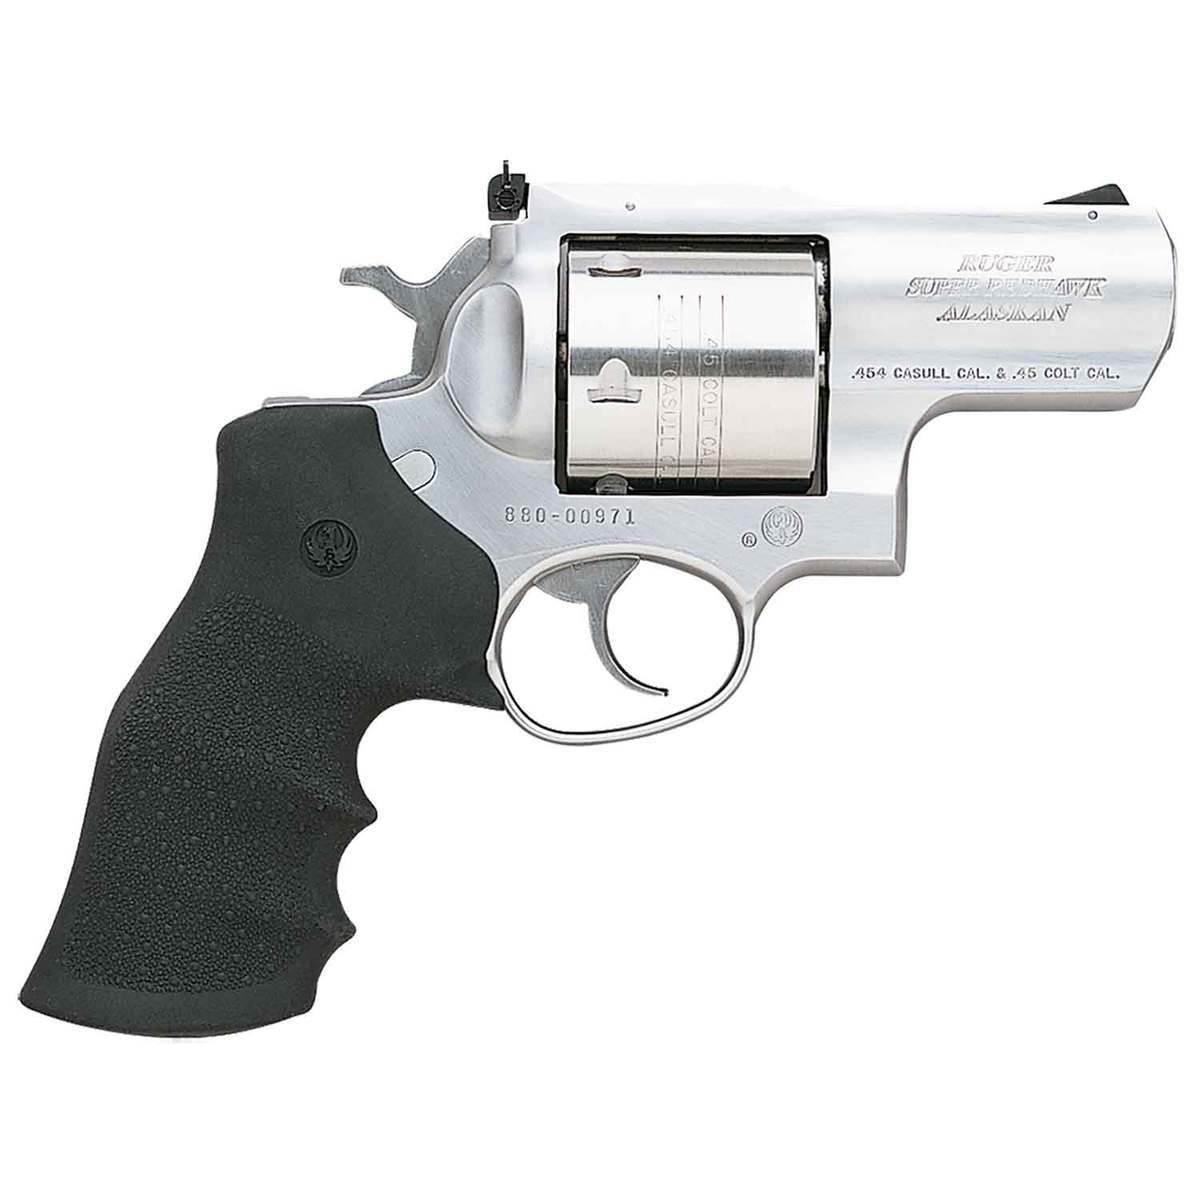 ruger-super-redhawk-alaskan-454-casull-25in-stainless-revolver-6-rounds-1105316-1.jpg